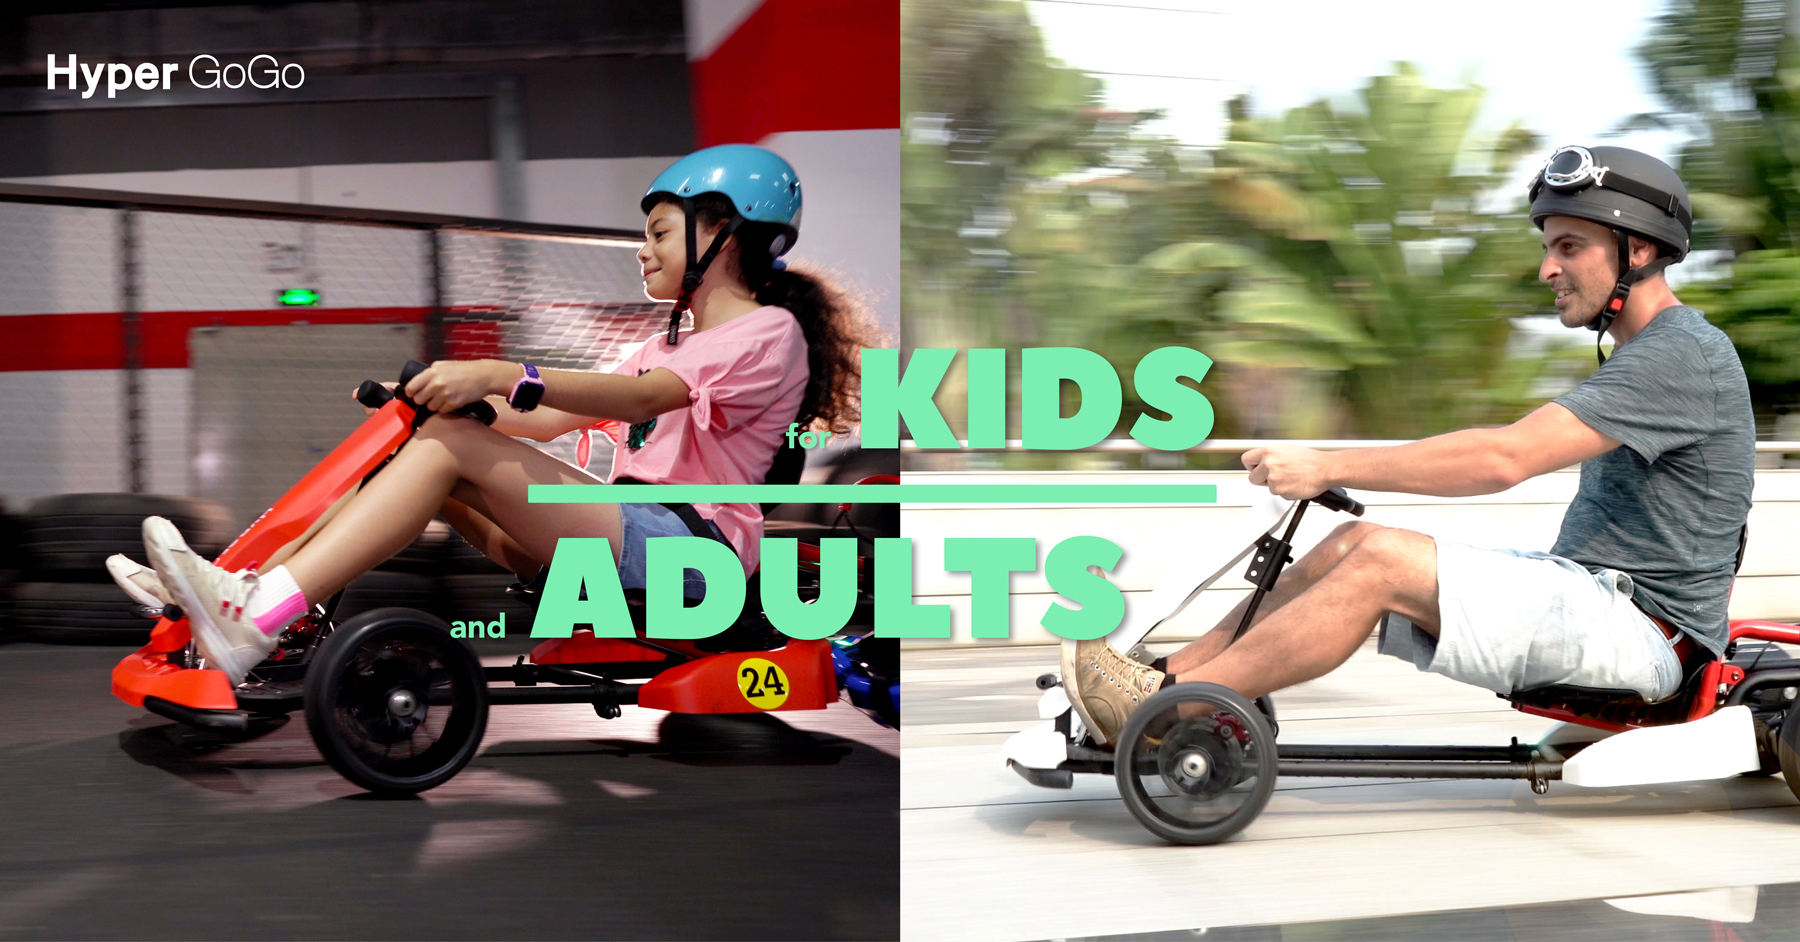 Go Kart Kit by Hyper GOGO - for Kids and Adult